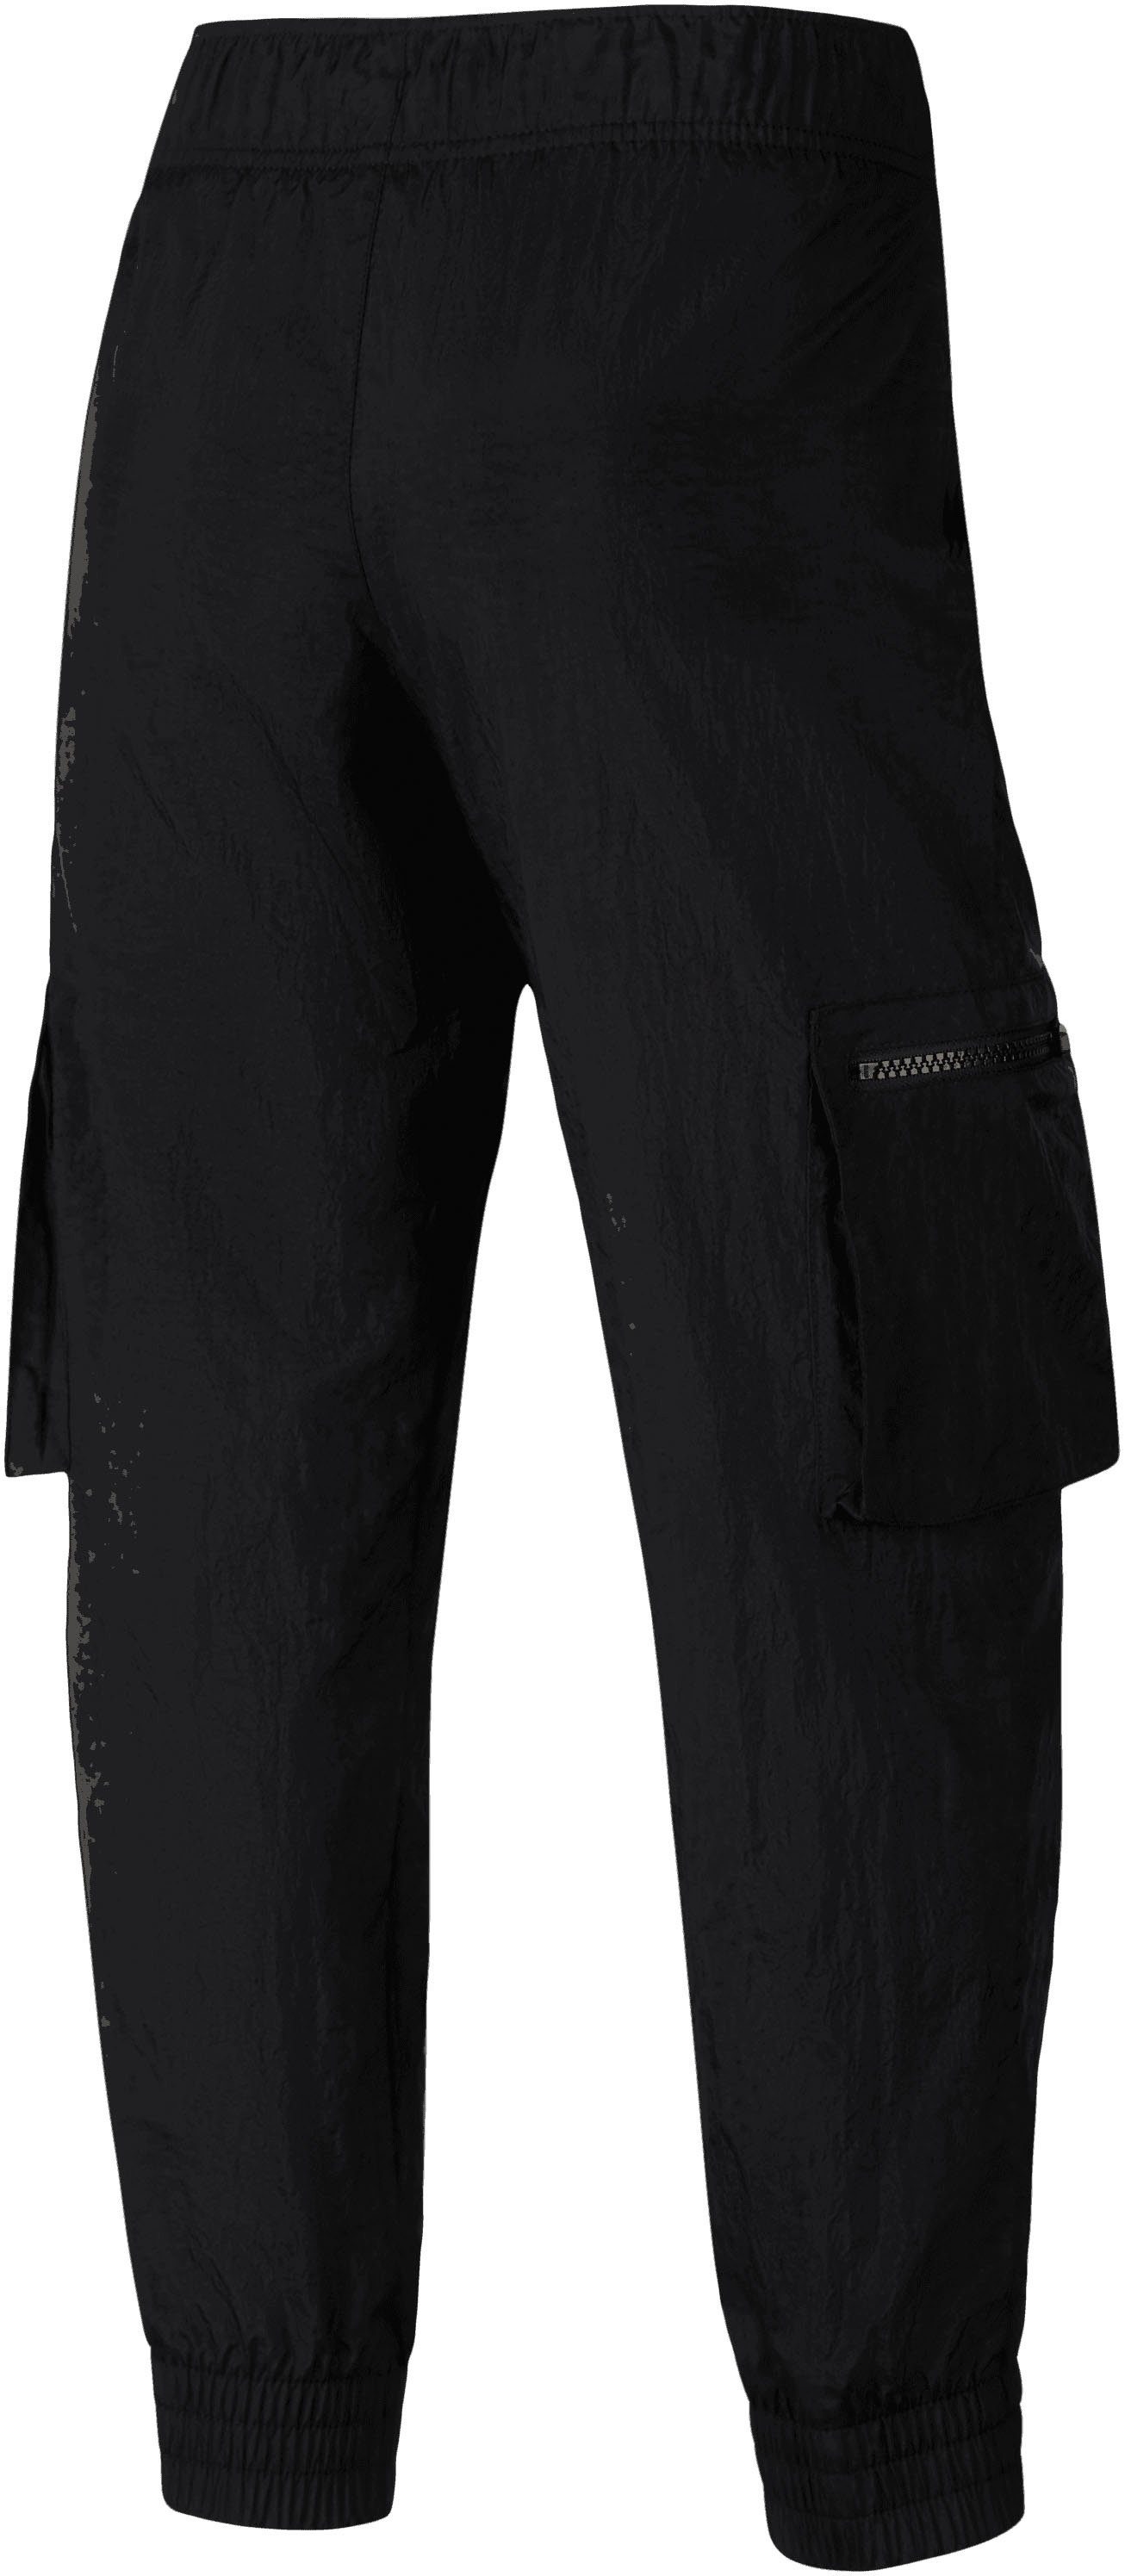 Nike Pants Kids' BLACK/WHITE Big Cargo Sportswear Sporthose (Girls) Woven